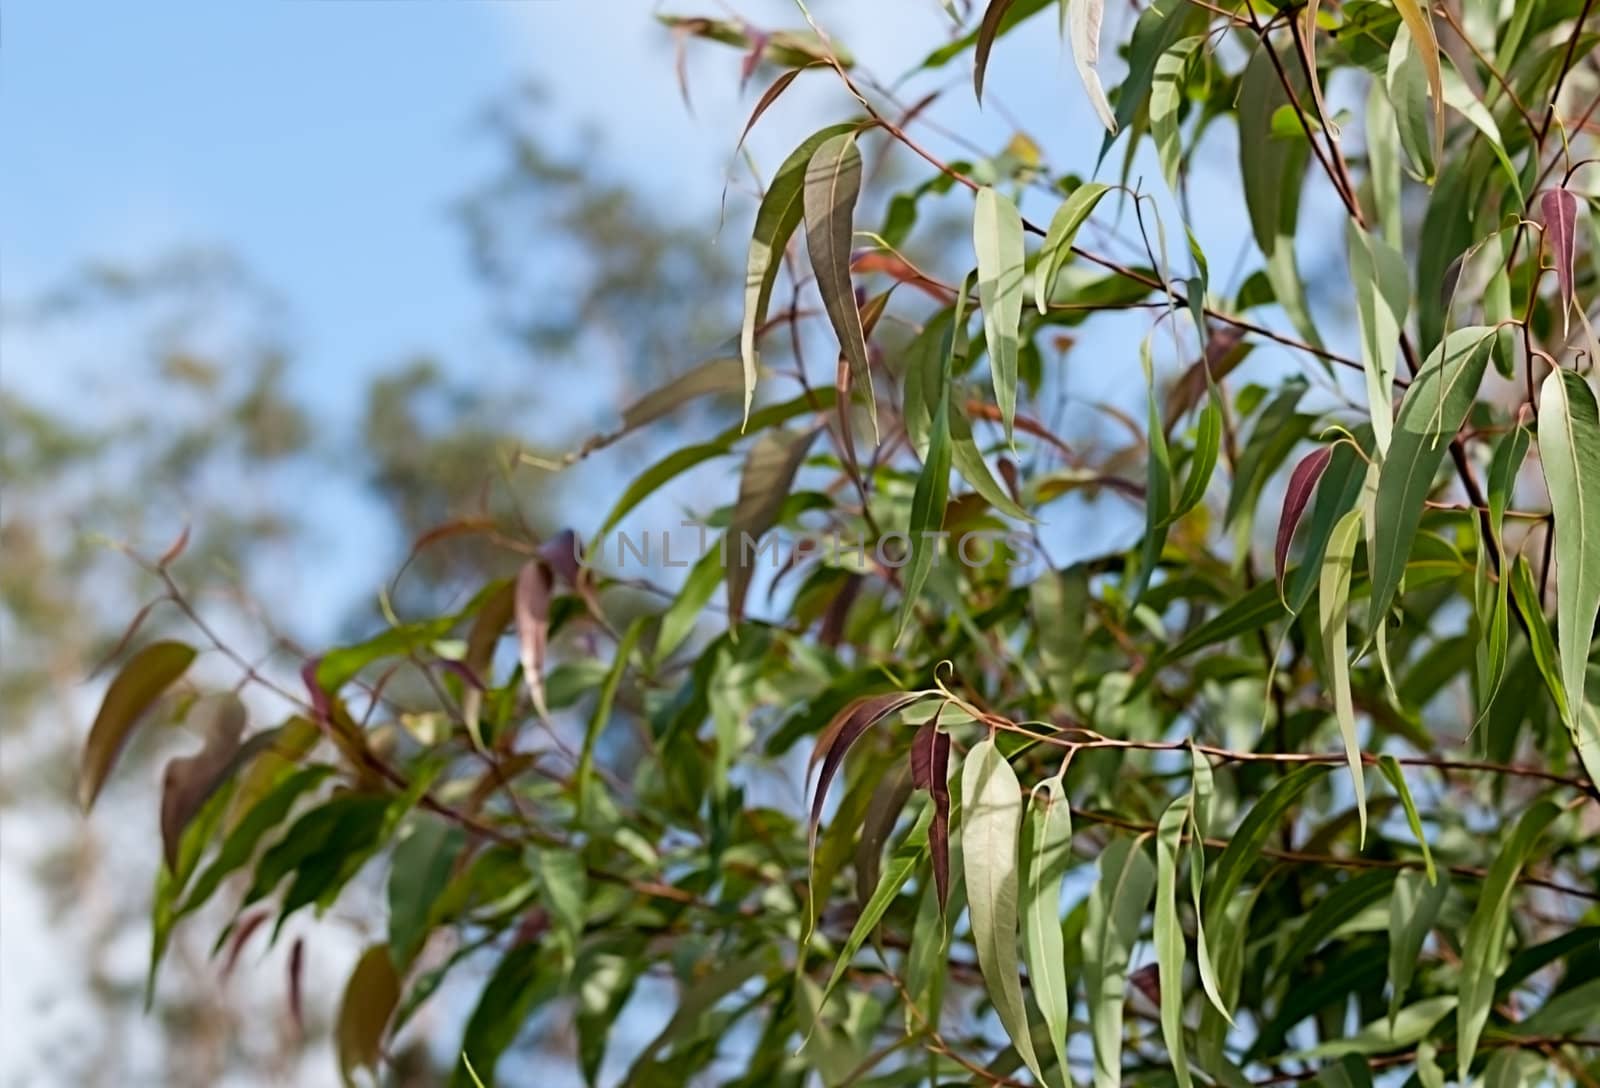 Australian eucalyptus gum tree Corymbia citriodora leaves known as lemon-scented gum or Spotted gum, native tree of Australia